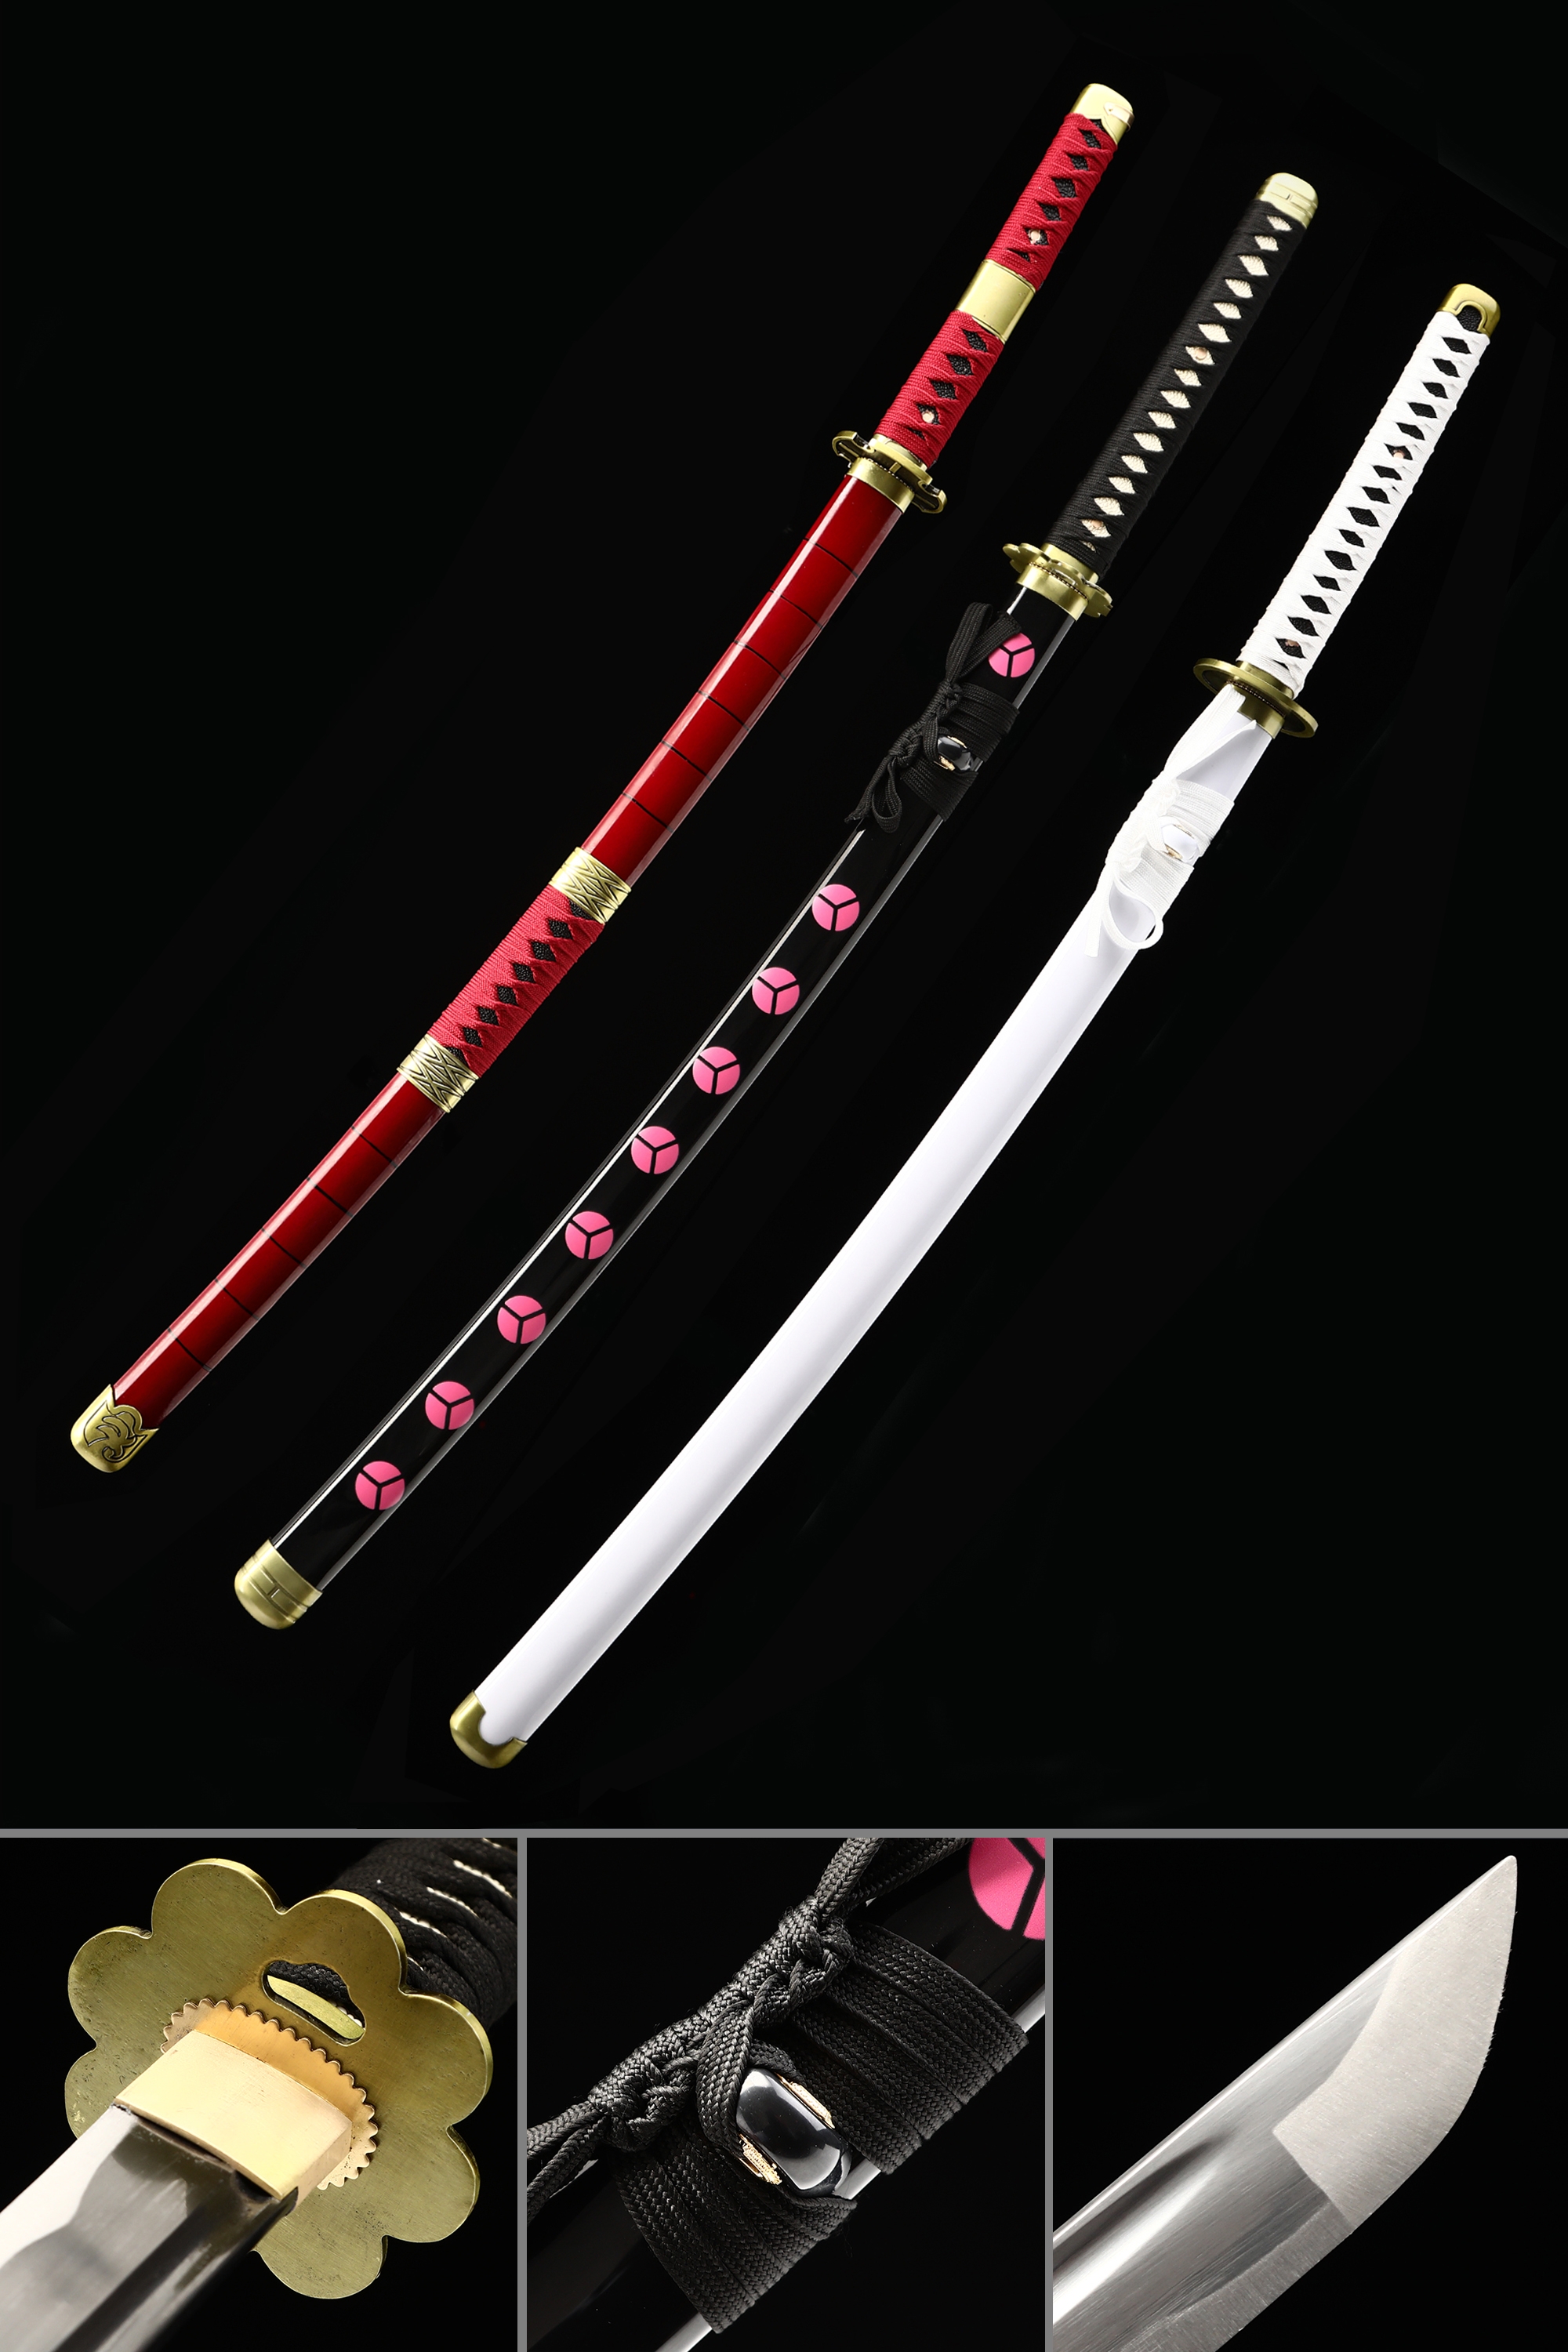 Anime Swords for Sale in the US - Swords Kingdom